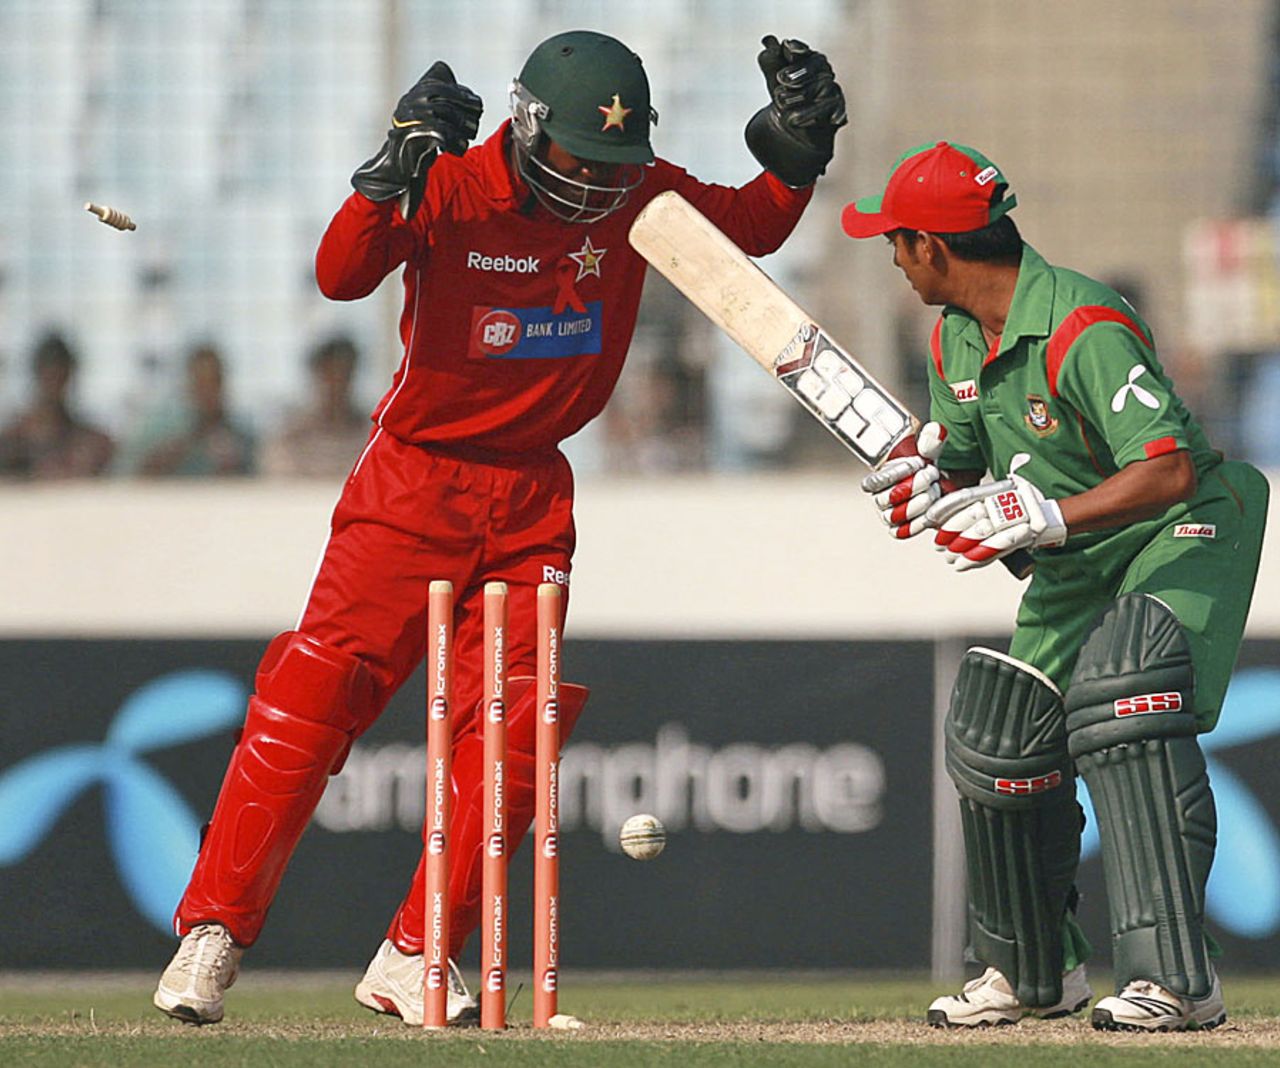 Mohammad Ashraful was bowled for 6, Bangladesh v Zimbabwe, 1st ODI, Mirpur, December 1, 2010